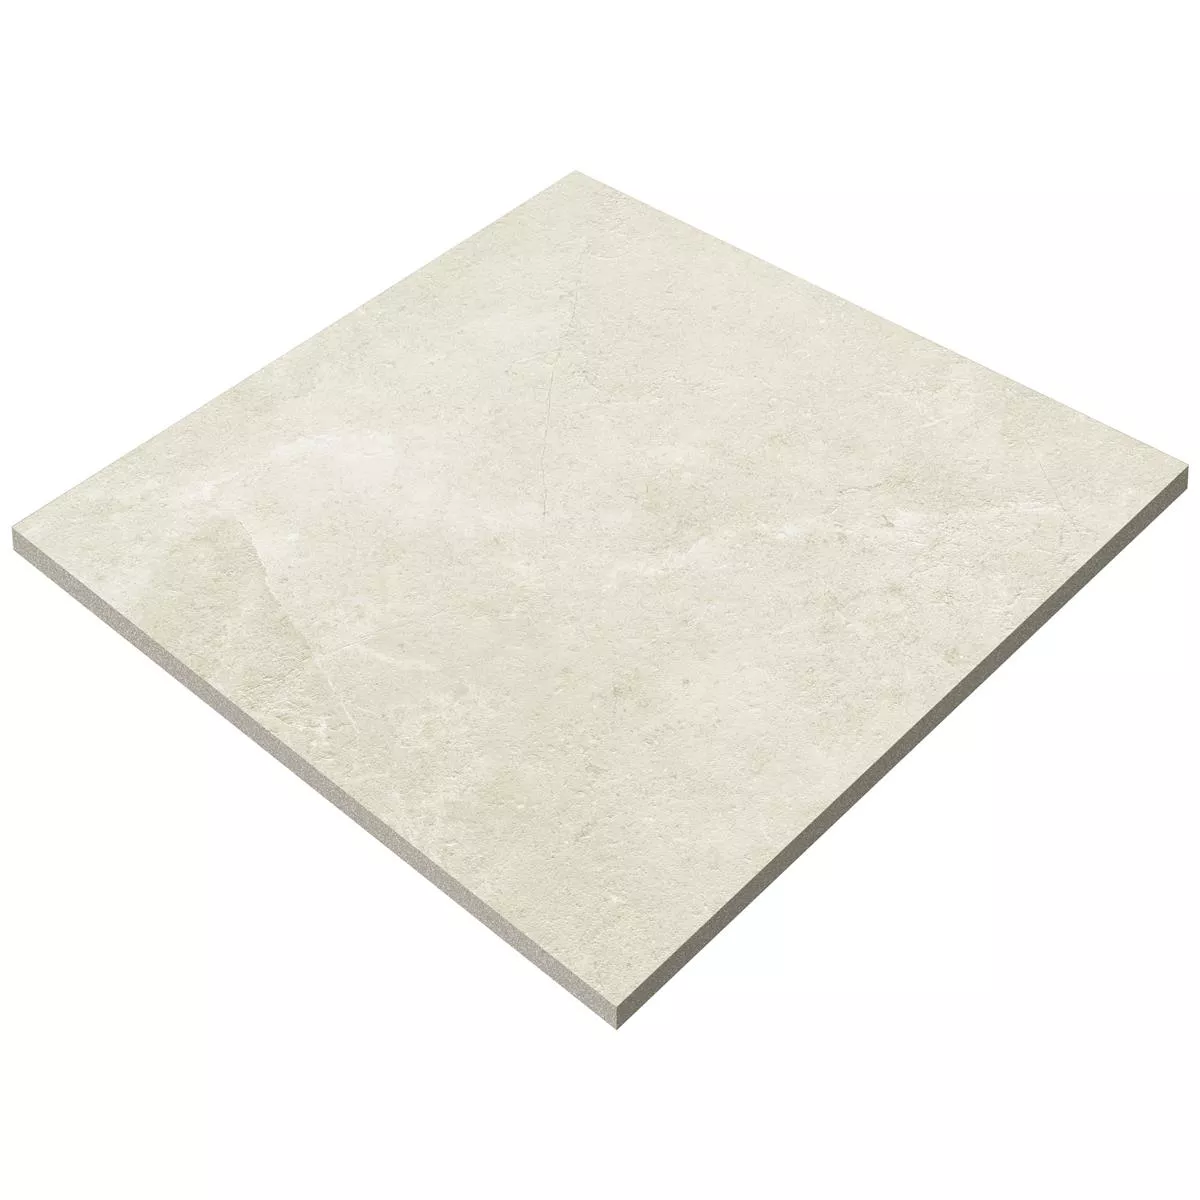 Sample Floor Tiles Bangui Stone Optic 60x60cm Ivory